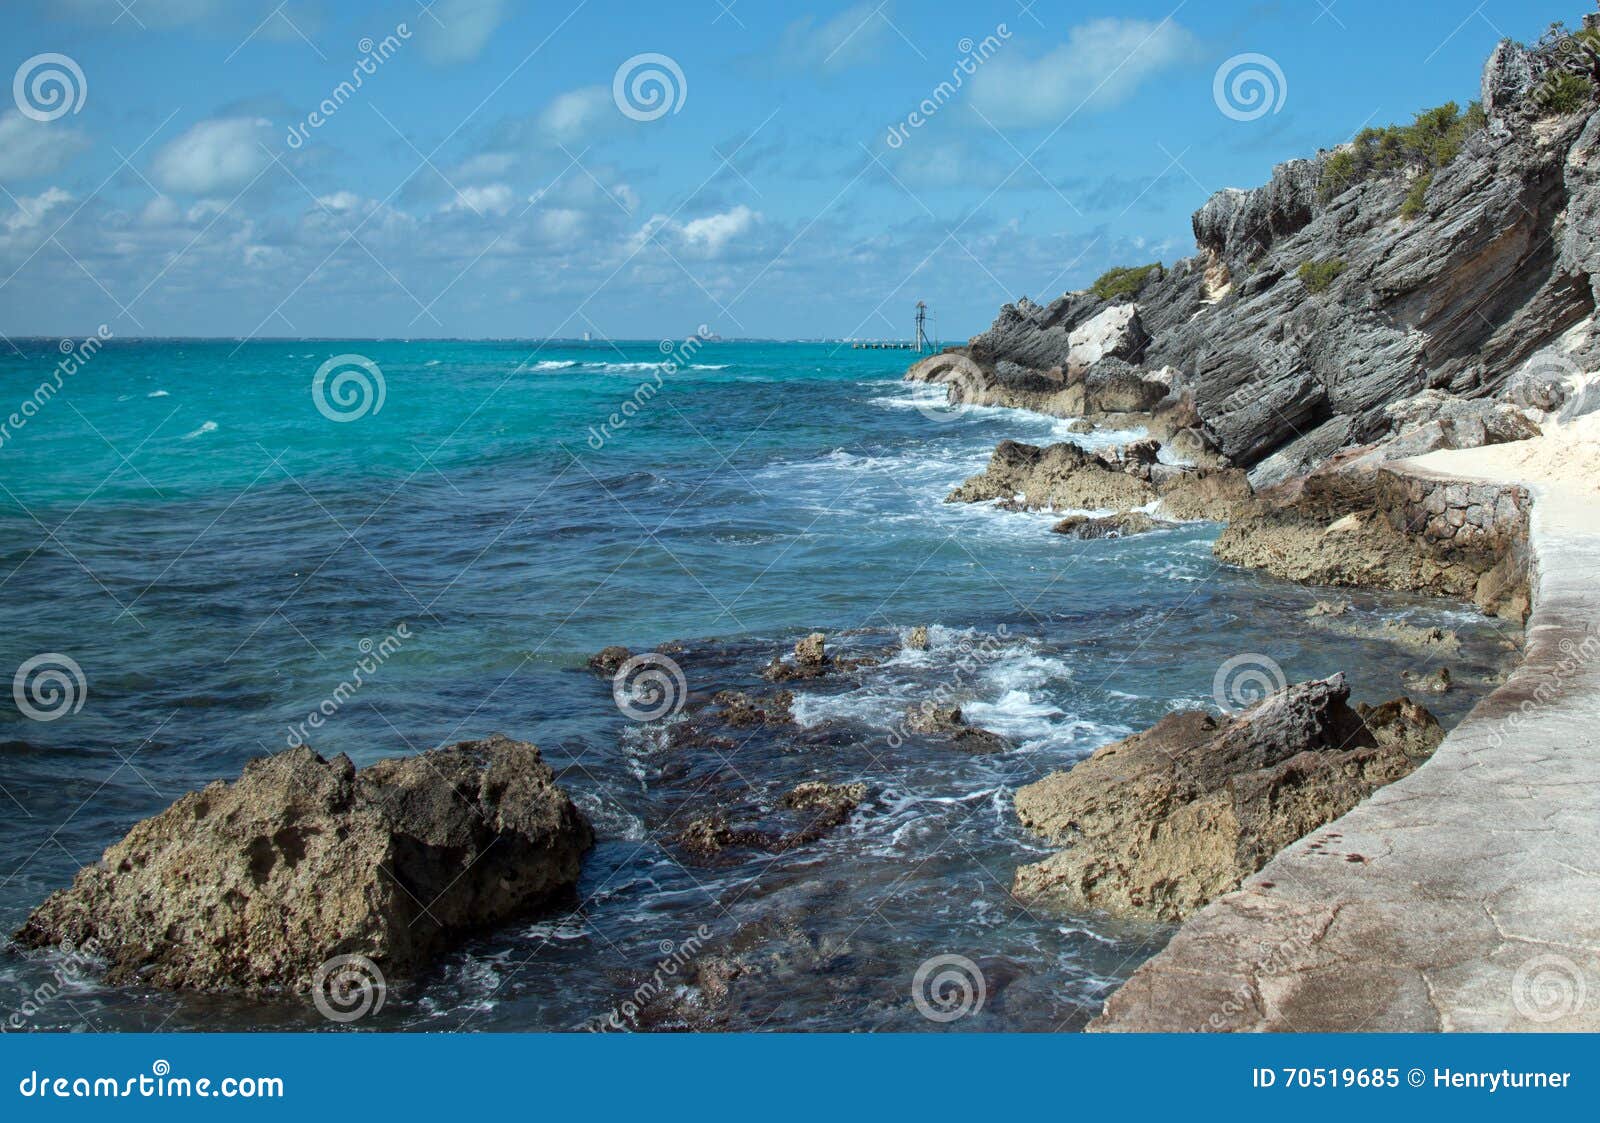 isla mujeres island - punta sur point also called acantilado del amanecer or cliff of the dawn